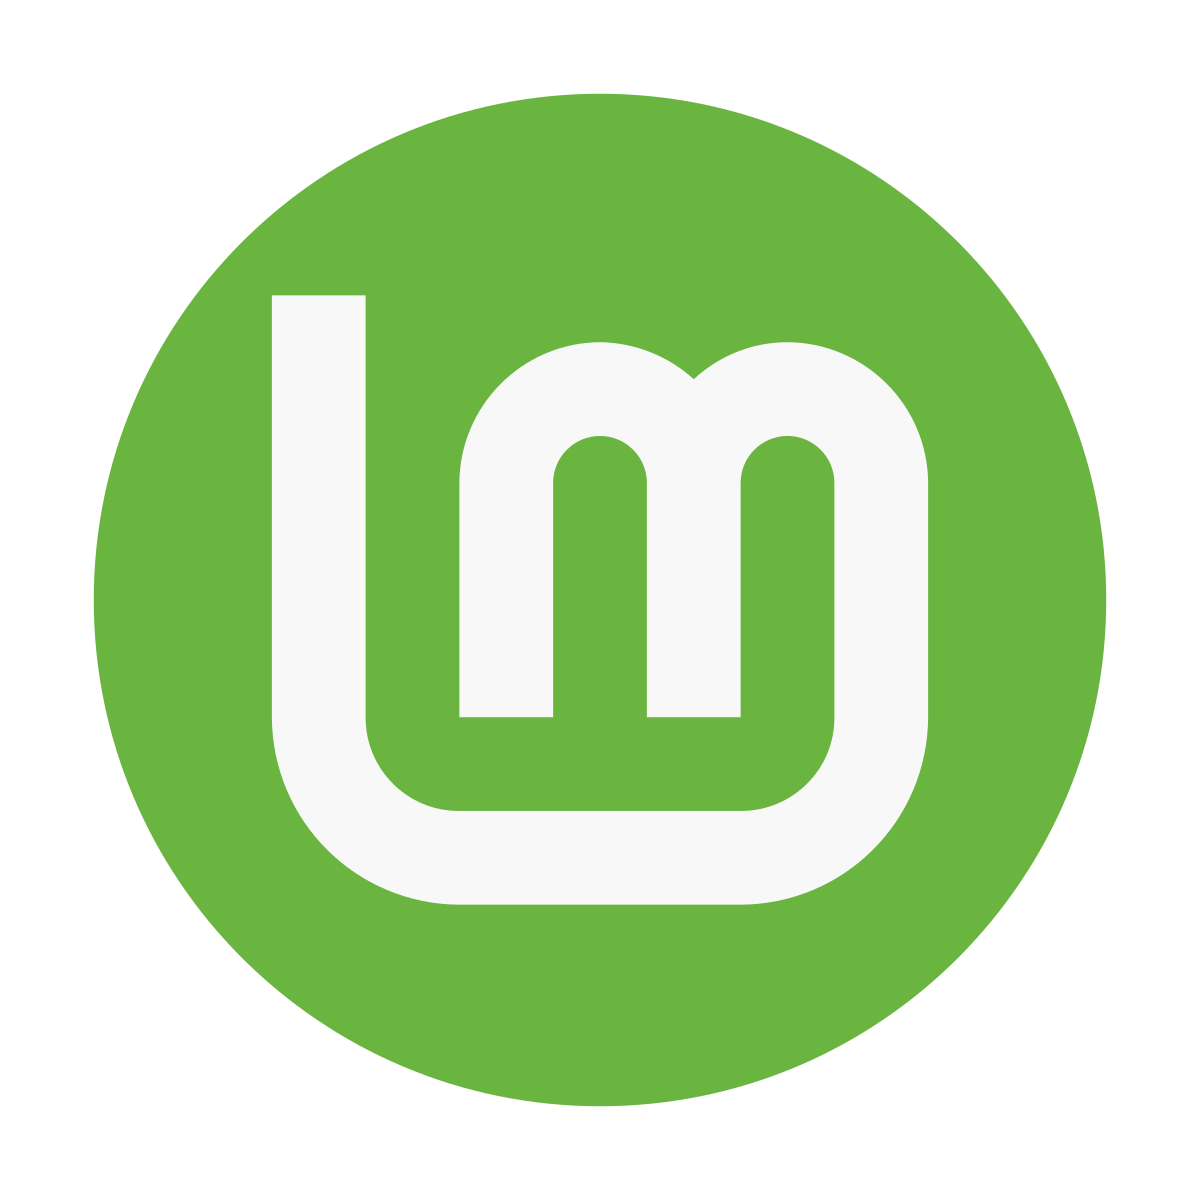 Linux_Mint_logo_without_wordmark.svg.png